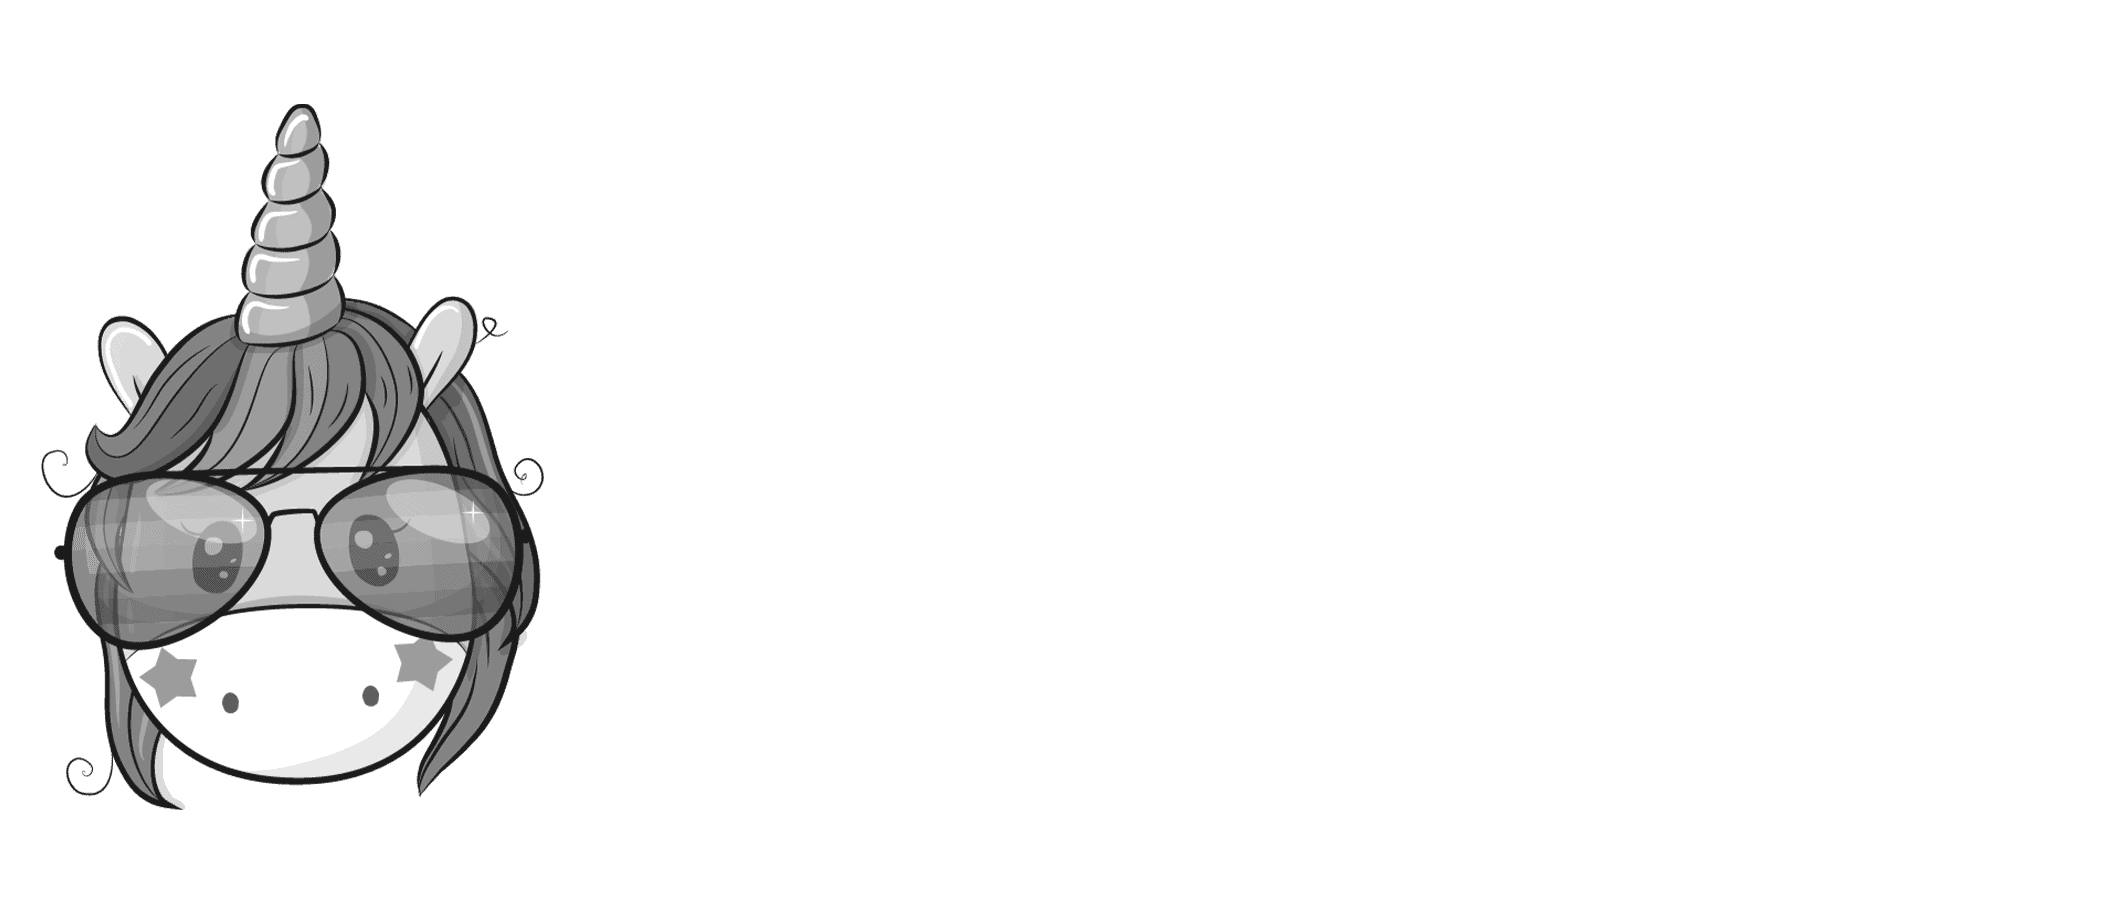 Unicorn Nation Logo | BRANDiT Project